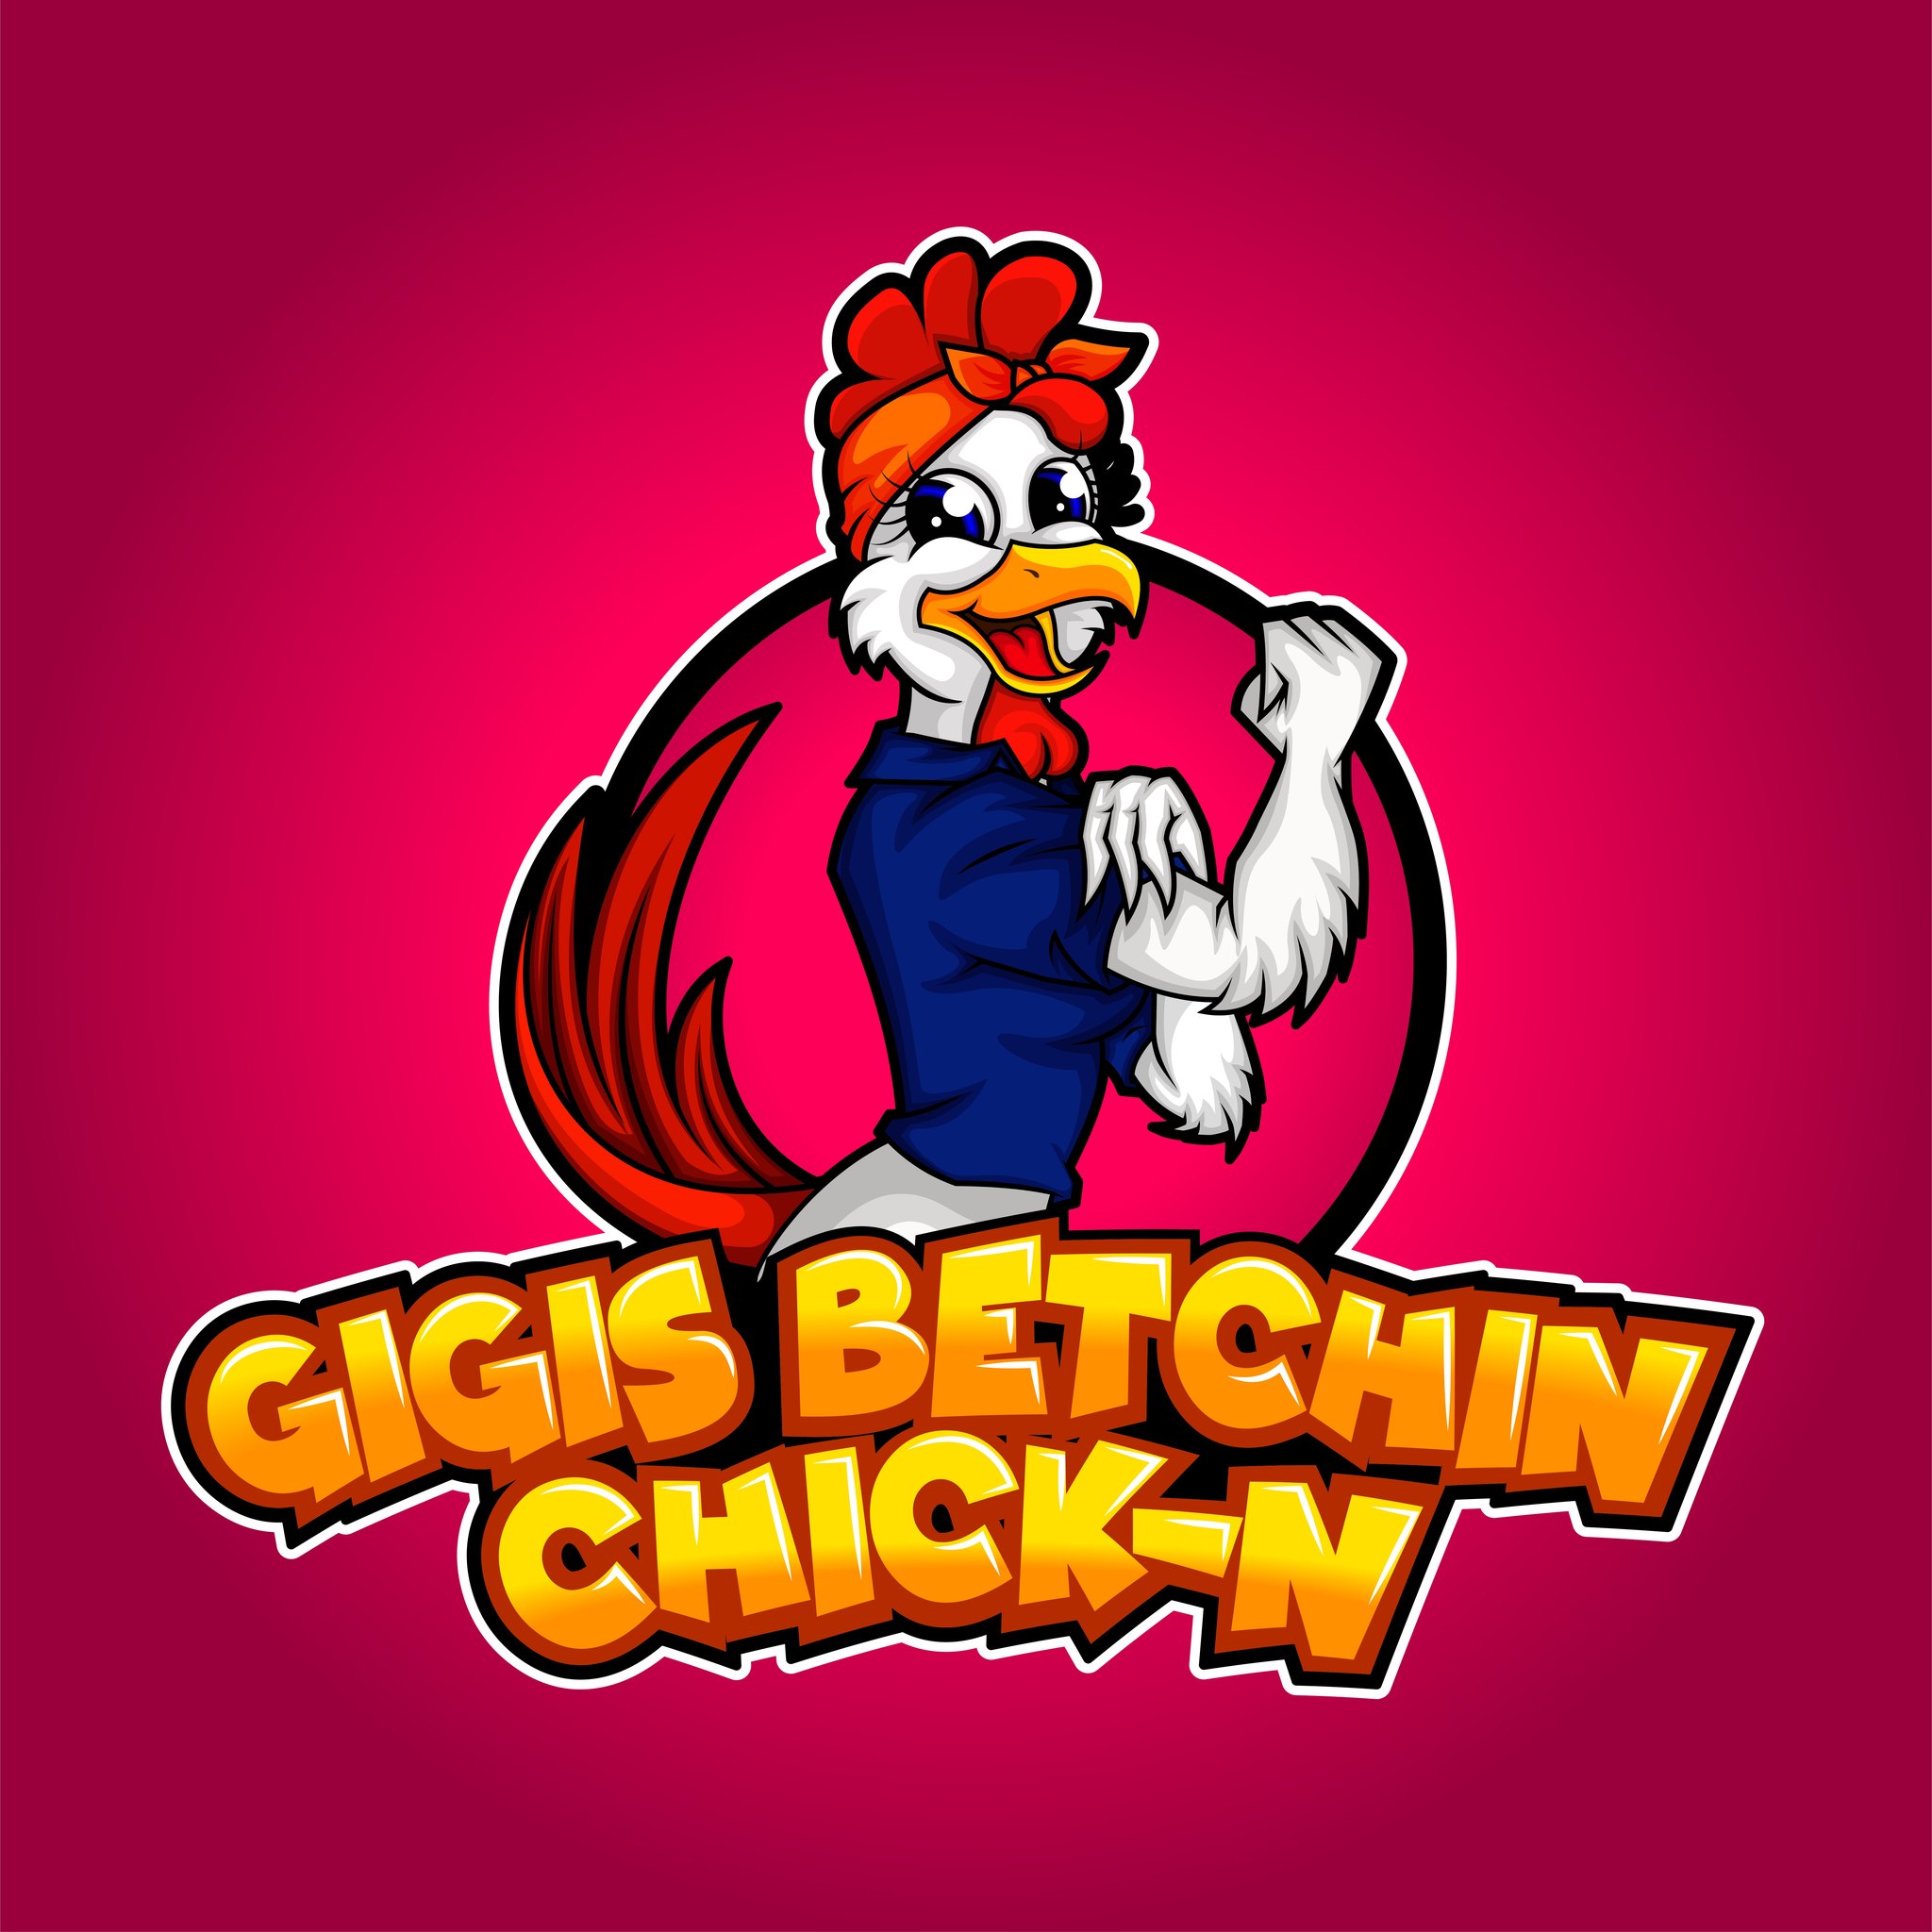 Gigis Betchin Chick-N